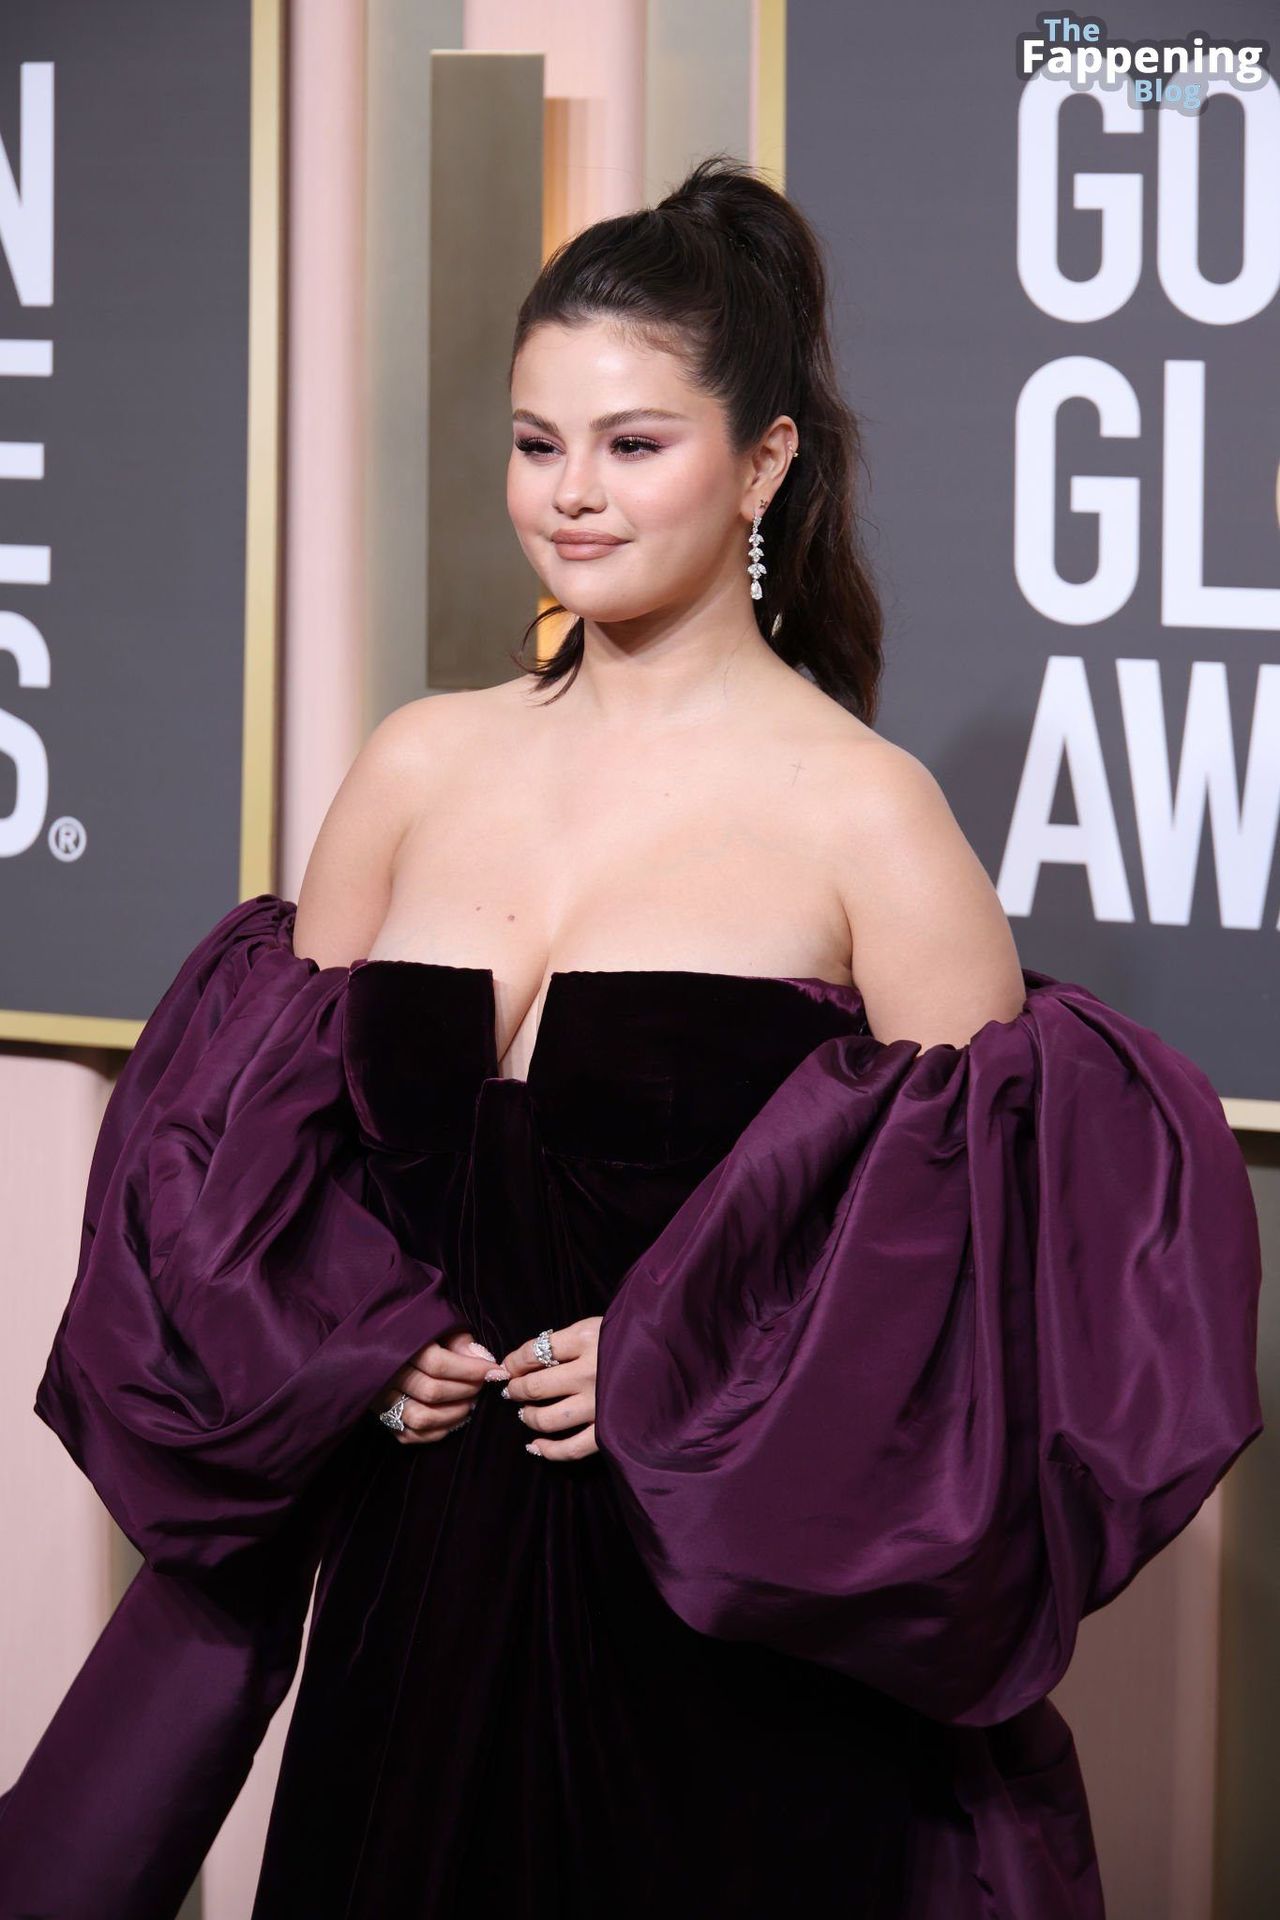 Selena-Gomez-Sexy-The-Fappening-Blog-23.jpg